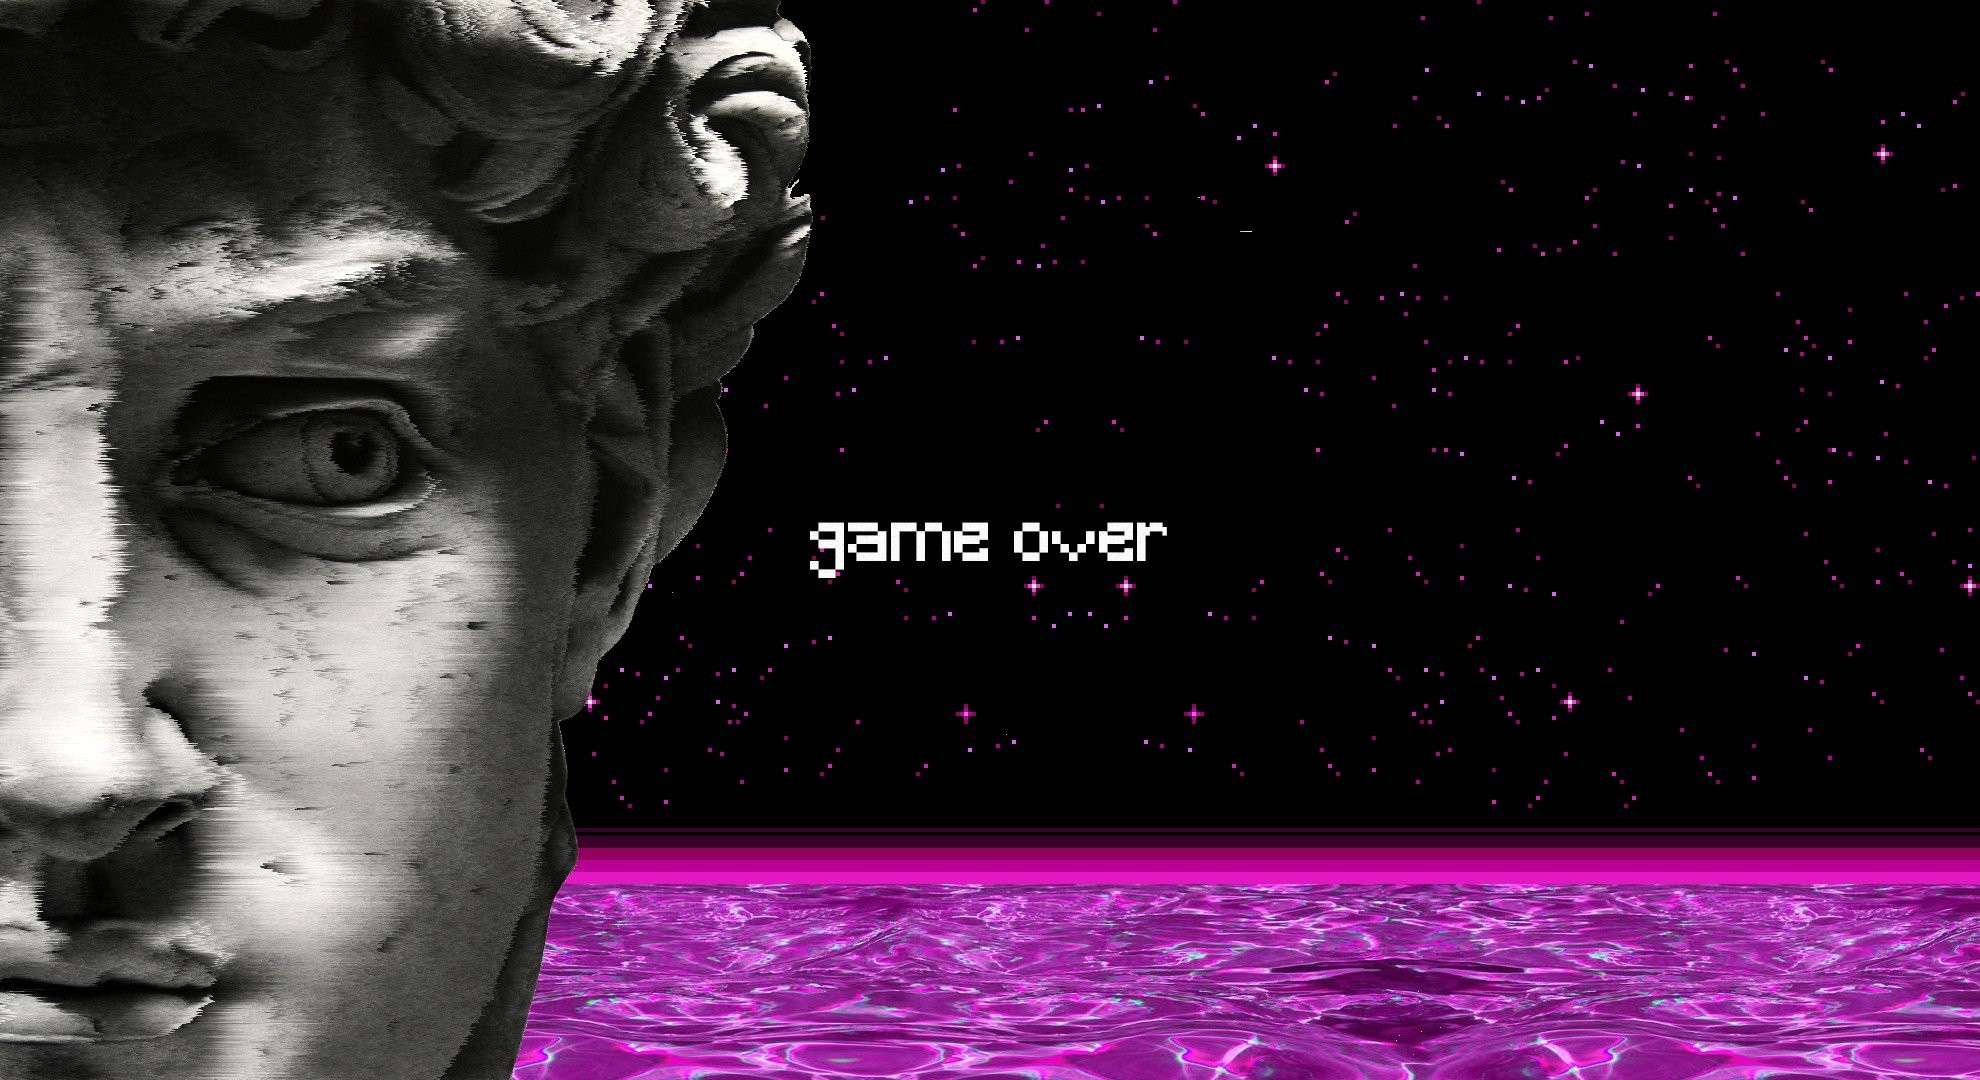 1980x1080 vaporwave, Statue, Water, Spaceship, GAME OVER, Pixel art